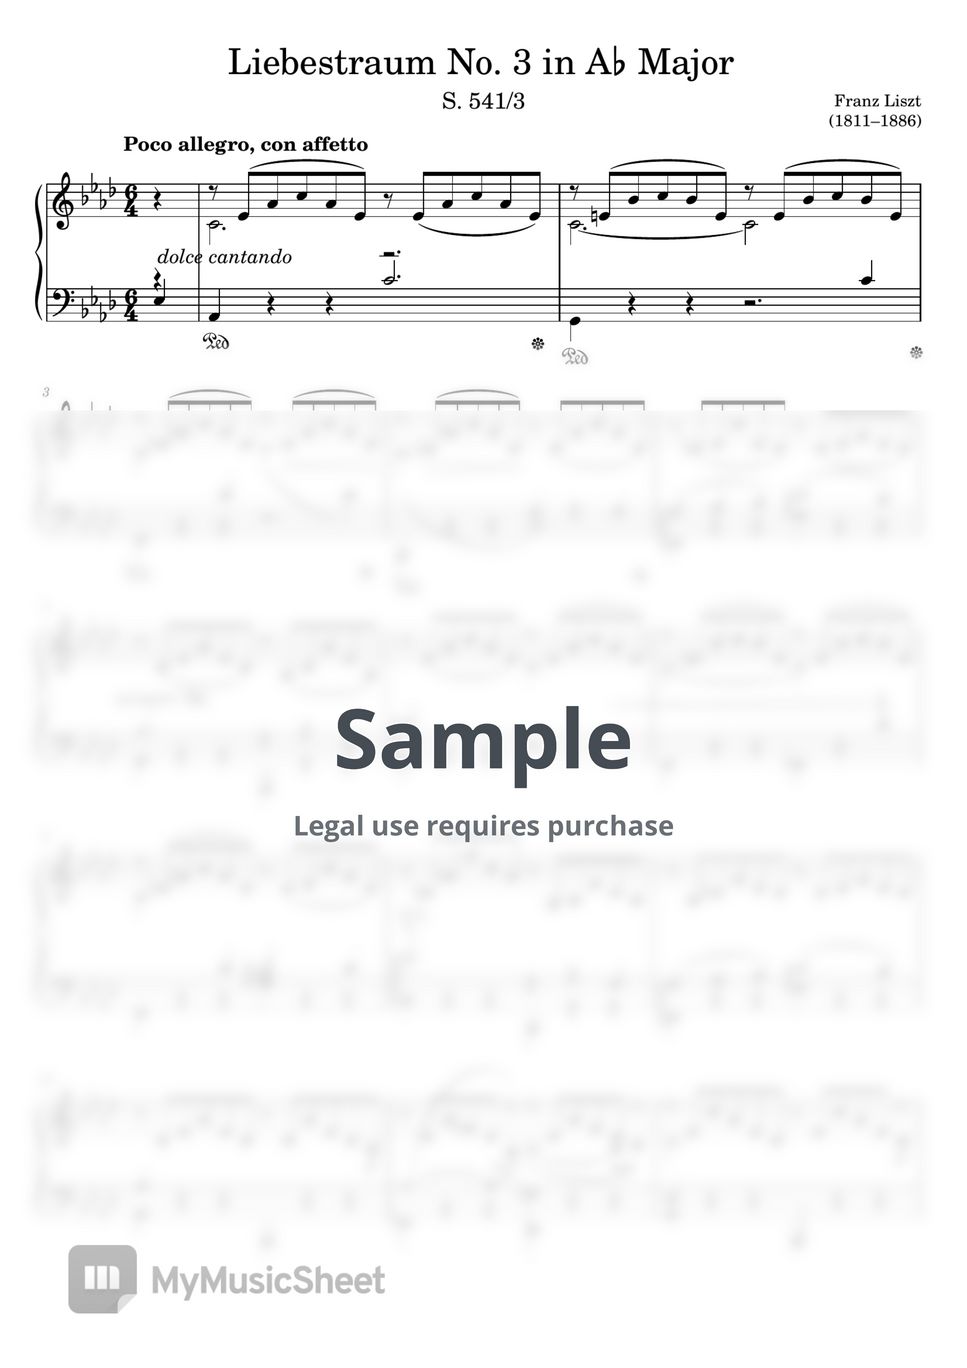 Franz Liszt - Liebestraum by Piano Tutorial Score